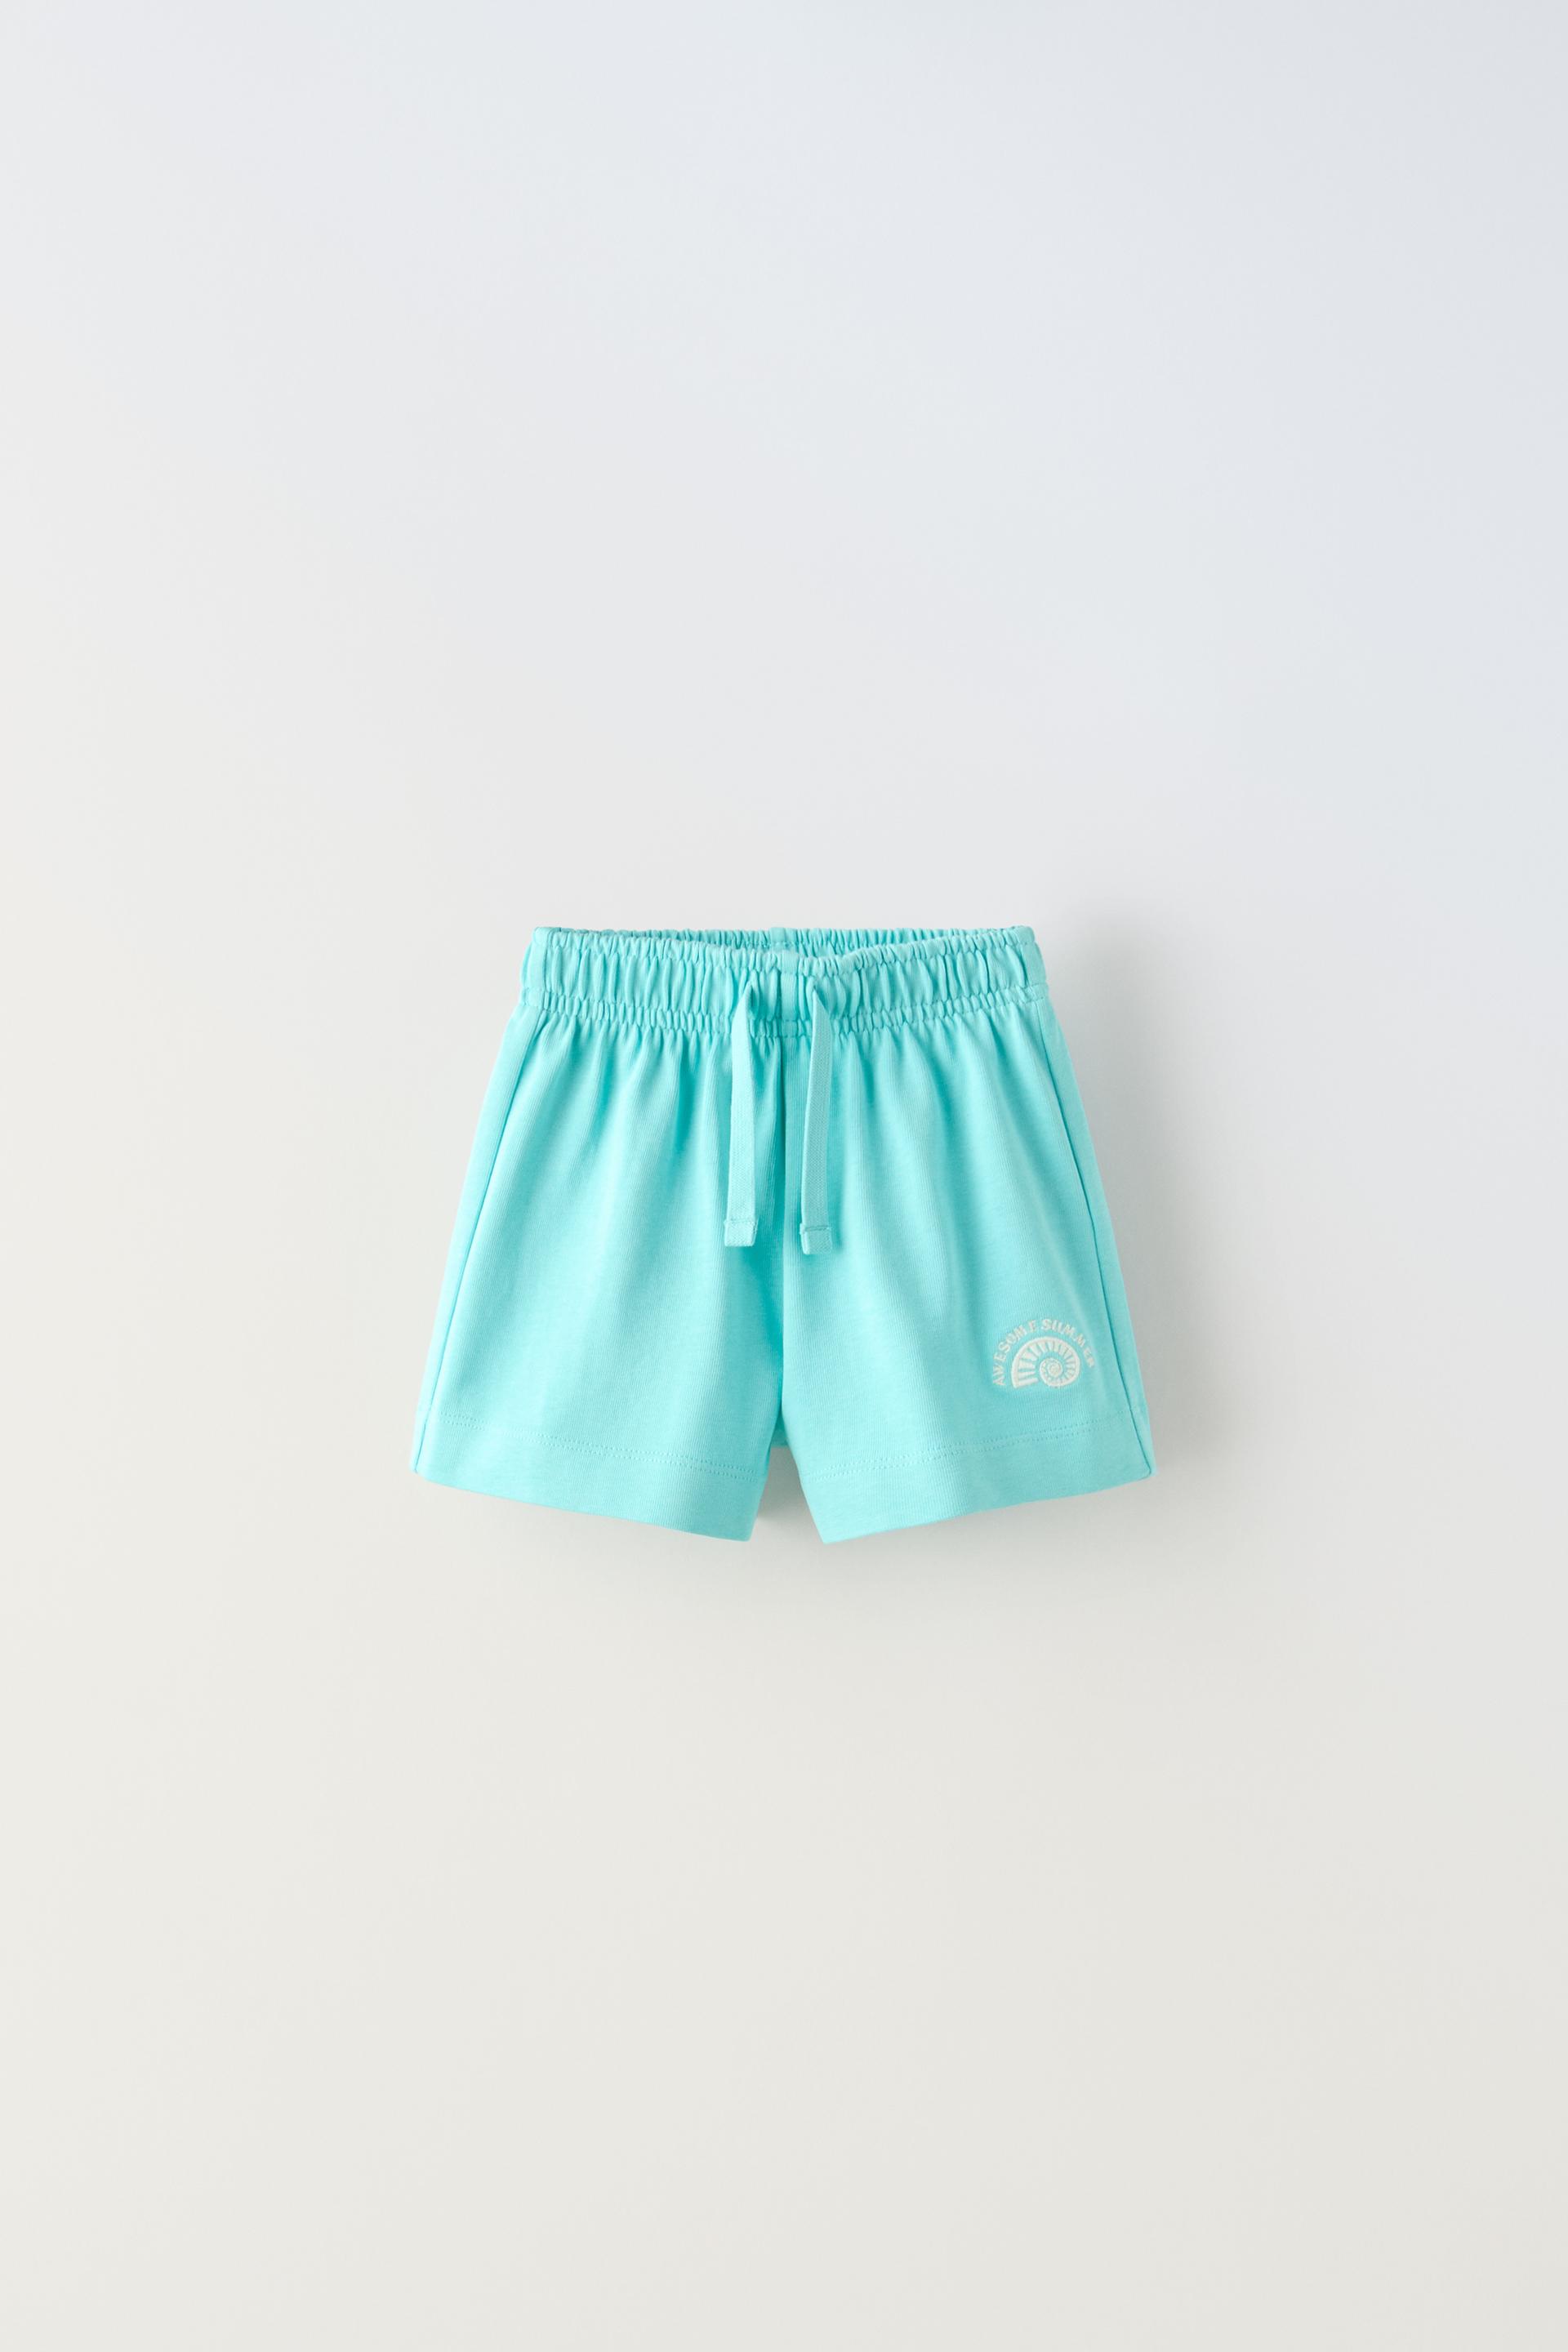 Шорты Zara Plush Bermuda, бирюзовый шорты с аппликациями на 9 12 месяцев